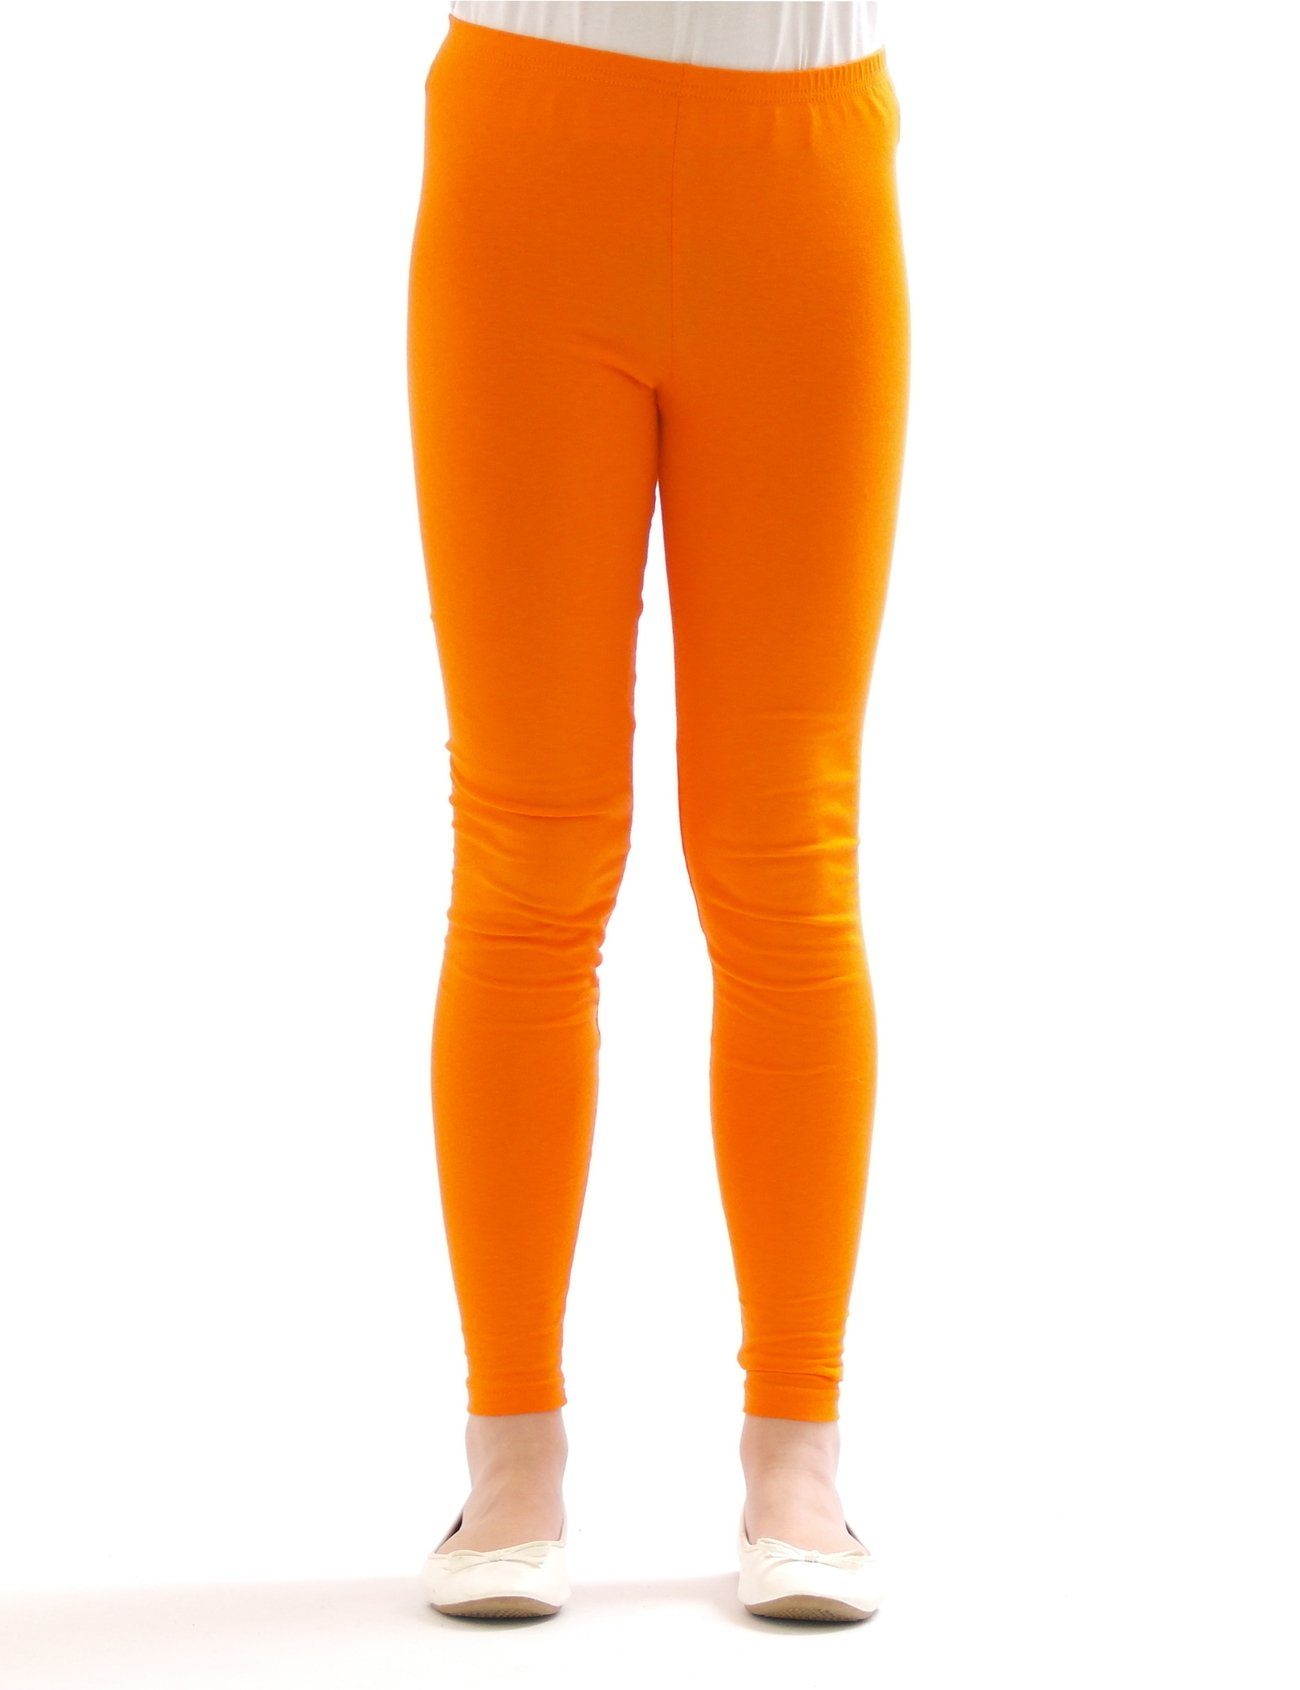 Kinder aus Leggings Orange Mädchen Baumwolle SYS lang blickdicht Leggings Hose